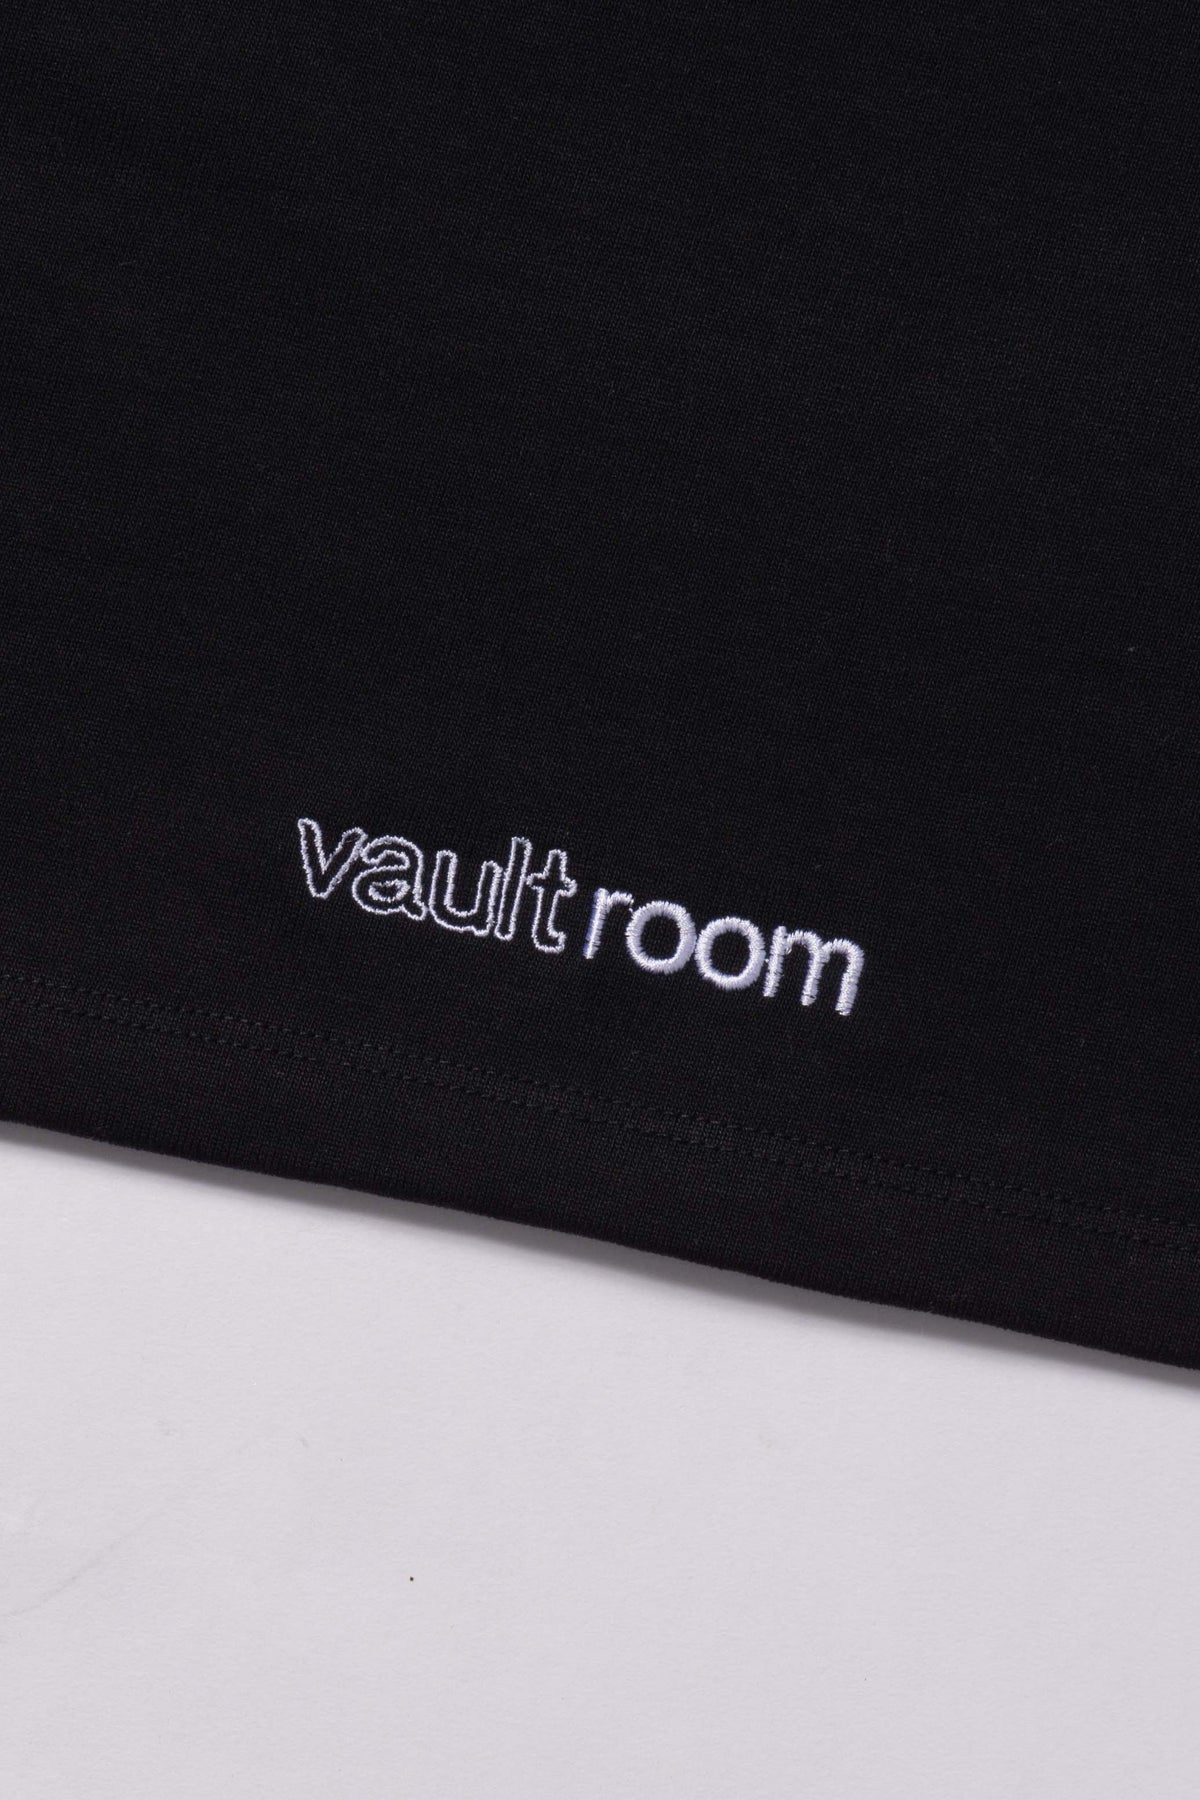 vaultroom LOGO MINI CROPPED TEE / WHT